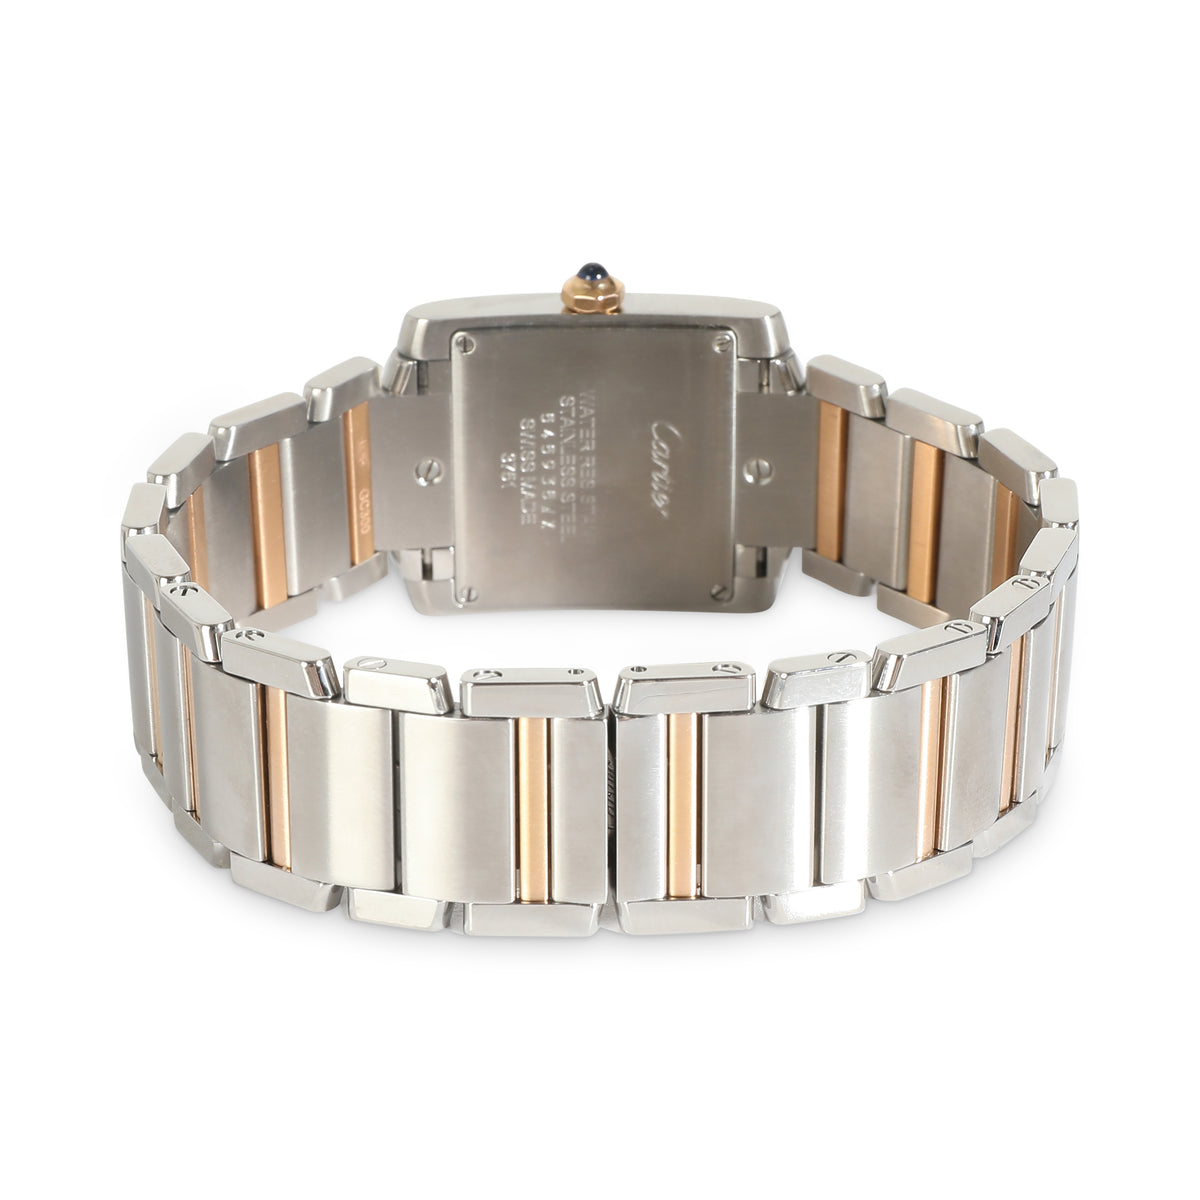 Tank Francaise de Cartier WE110004 Unisex Watch in 18kt Stainless Steel/